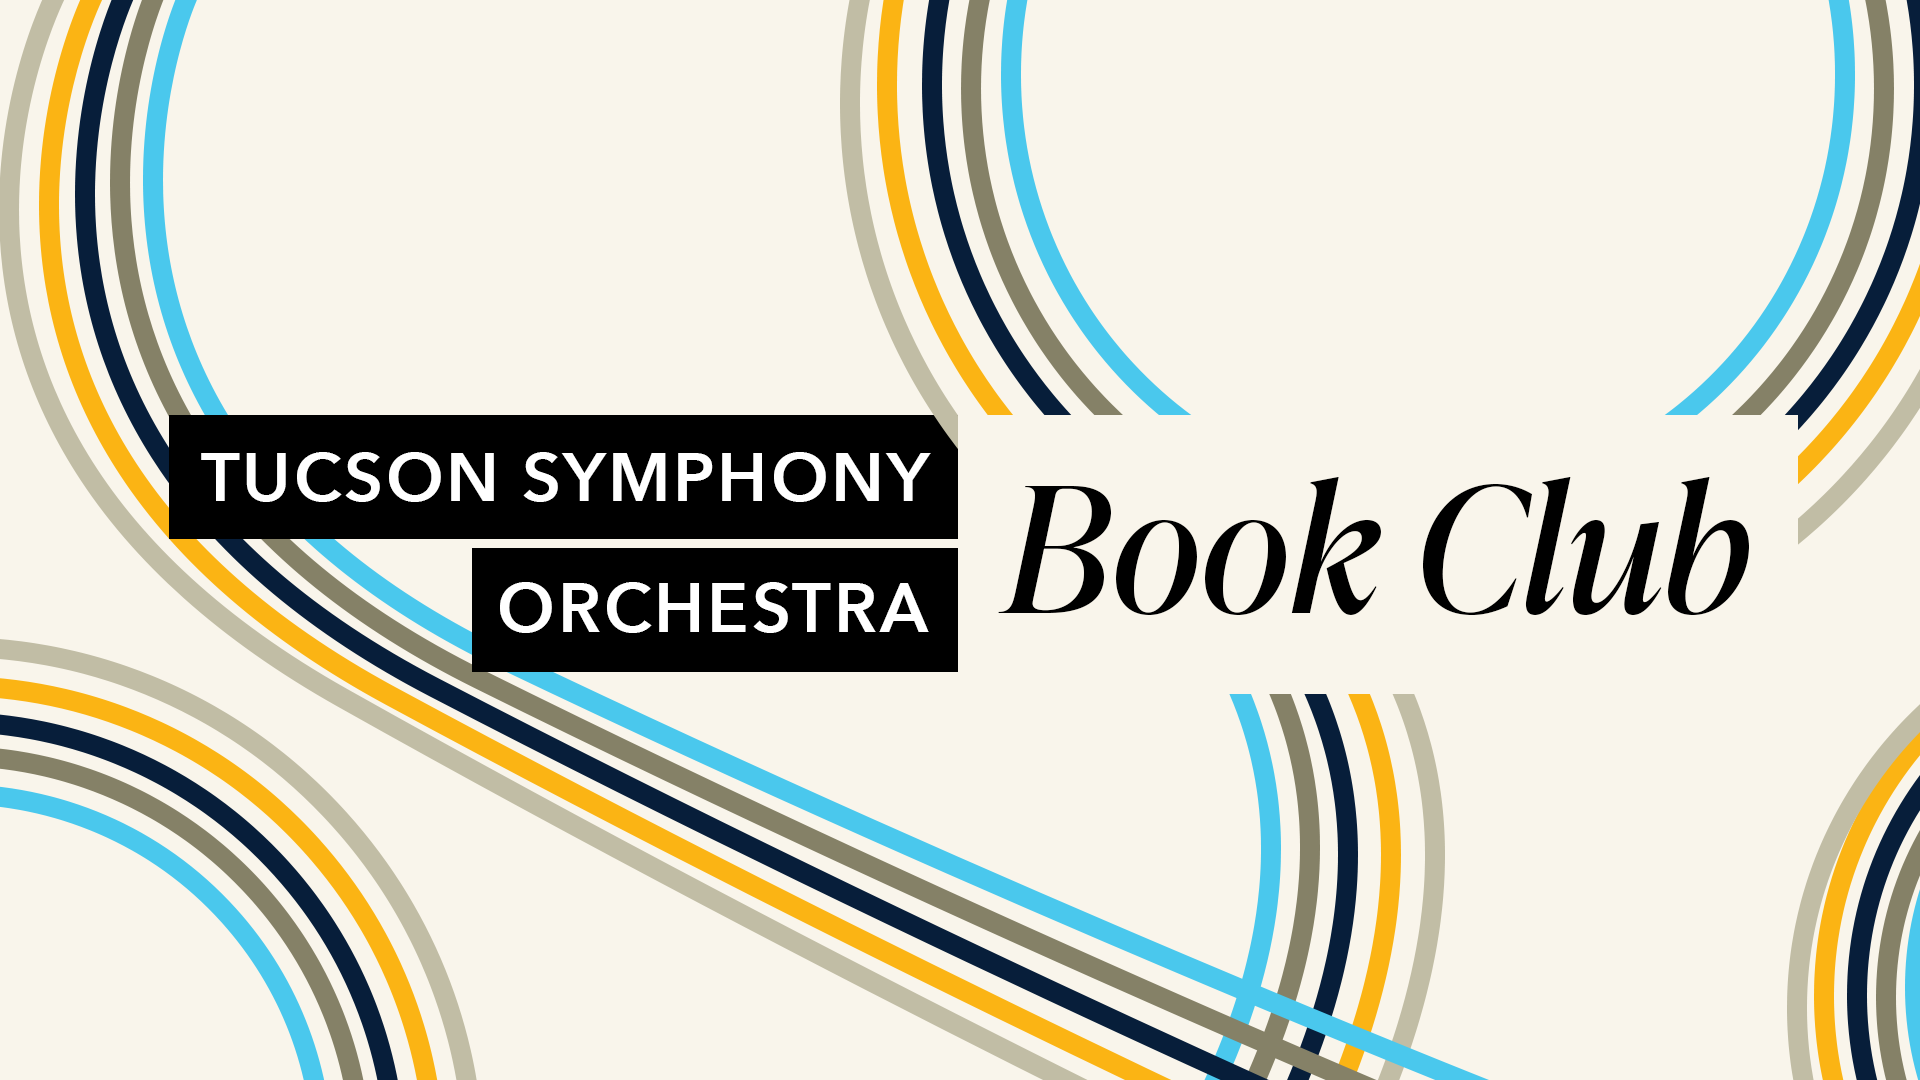 Tucson Symphony Orchestra Book Club